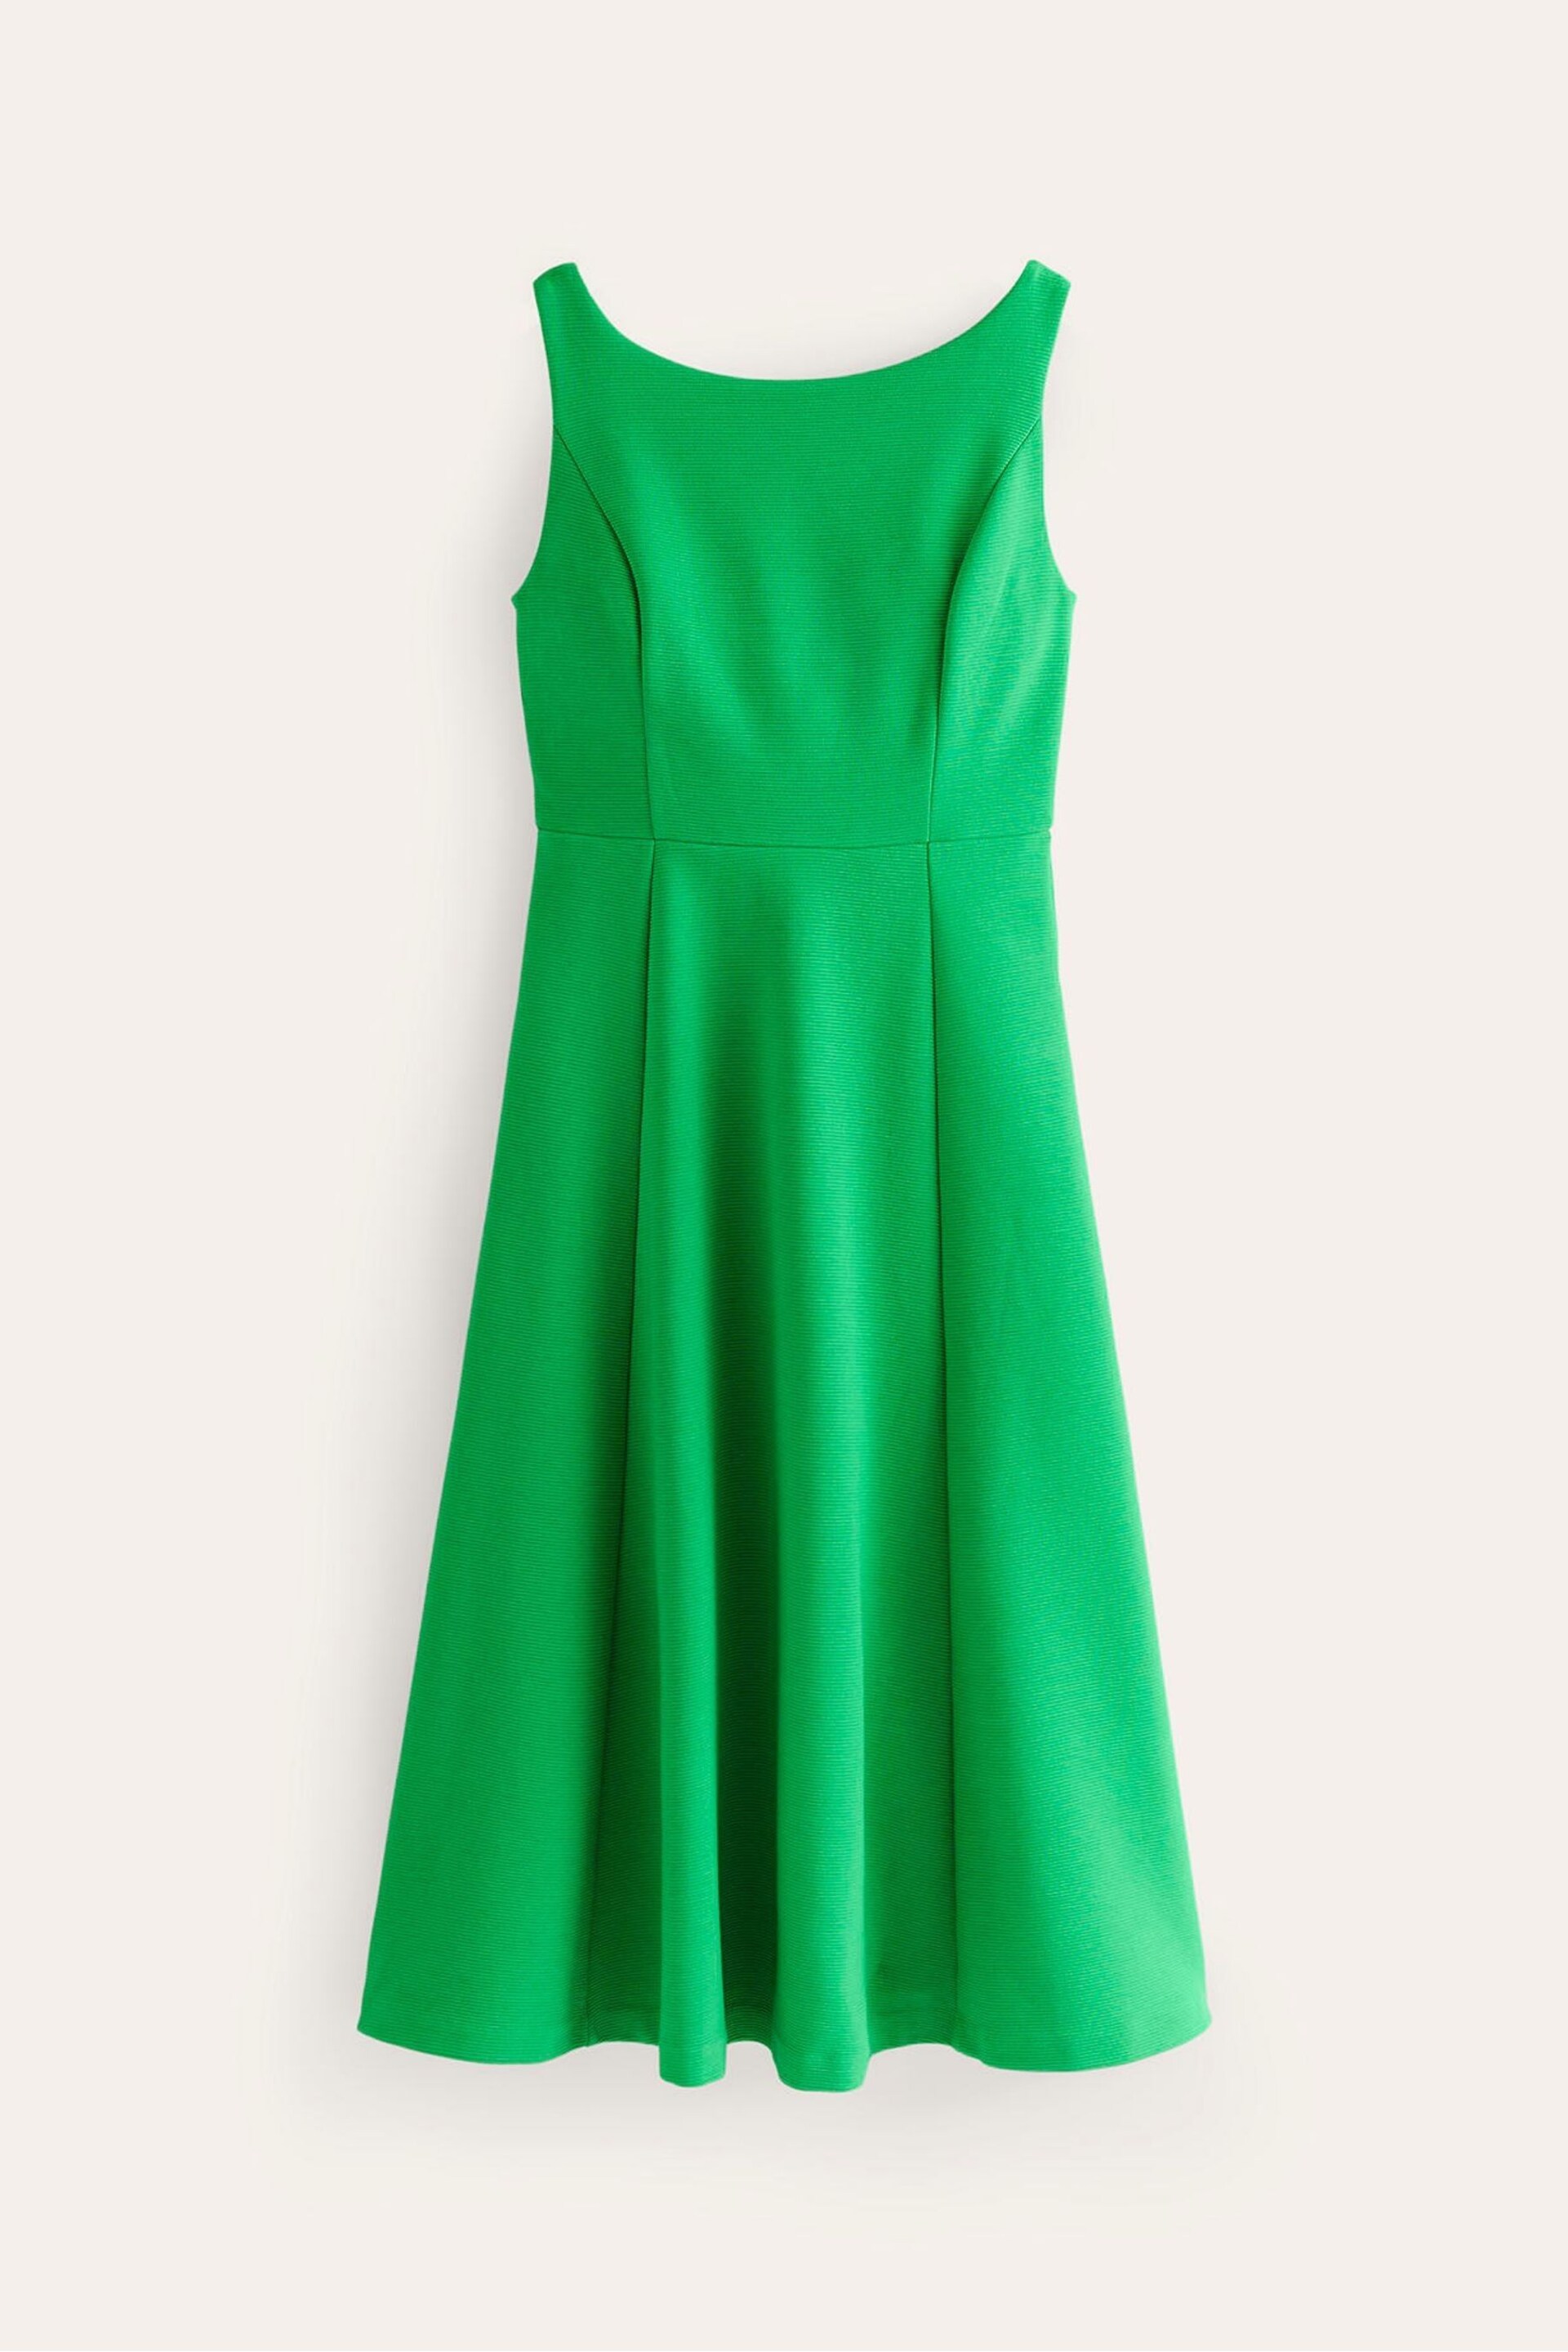 Boden Green Scarlet Ottoman Ponte Dress - Image 5 of 5